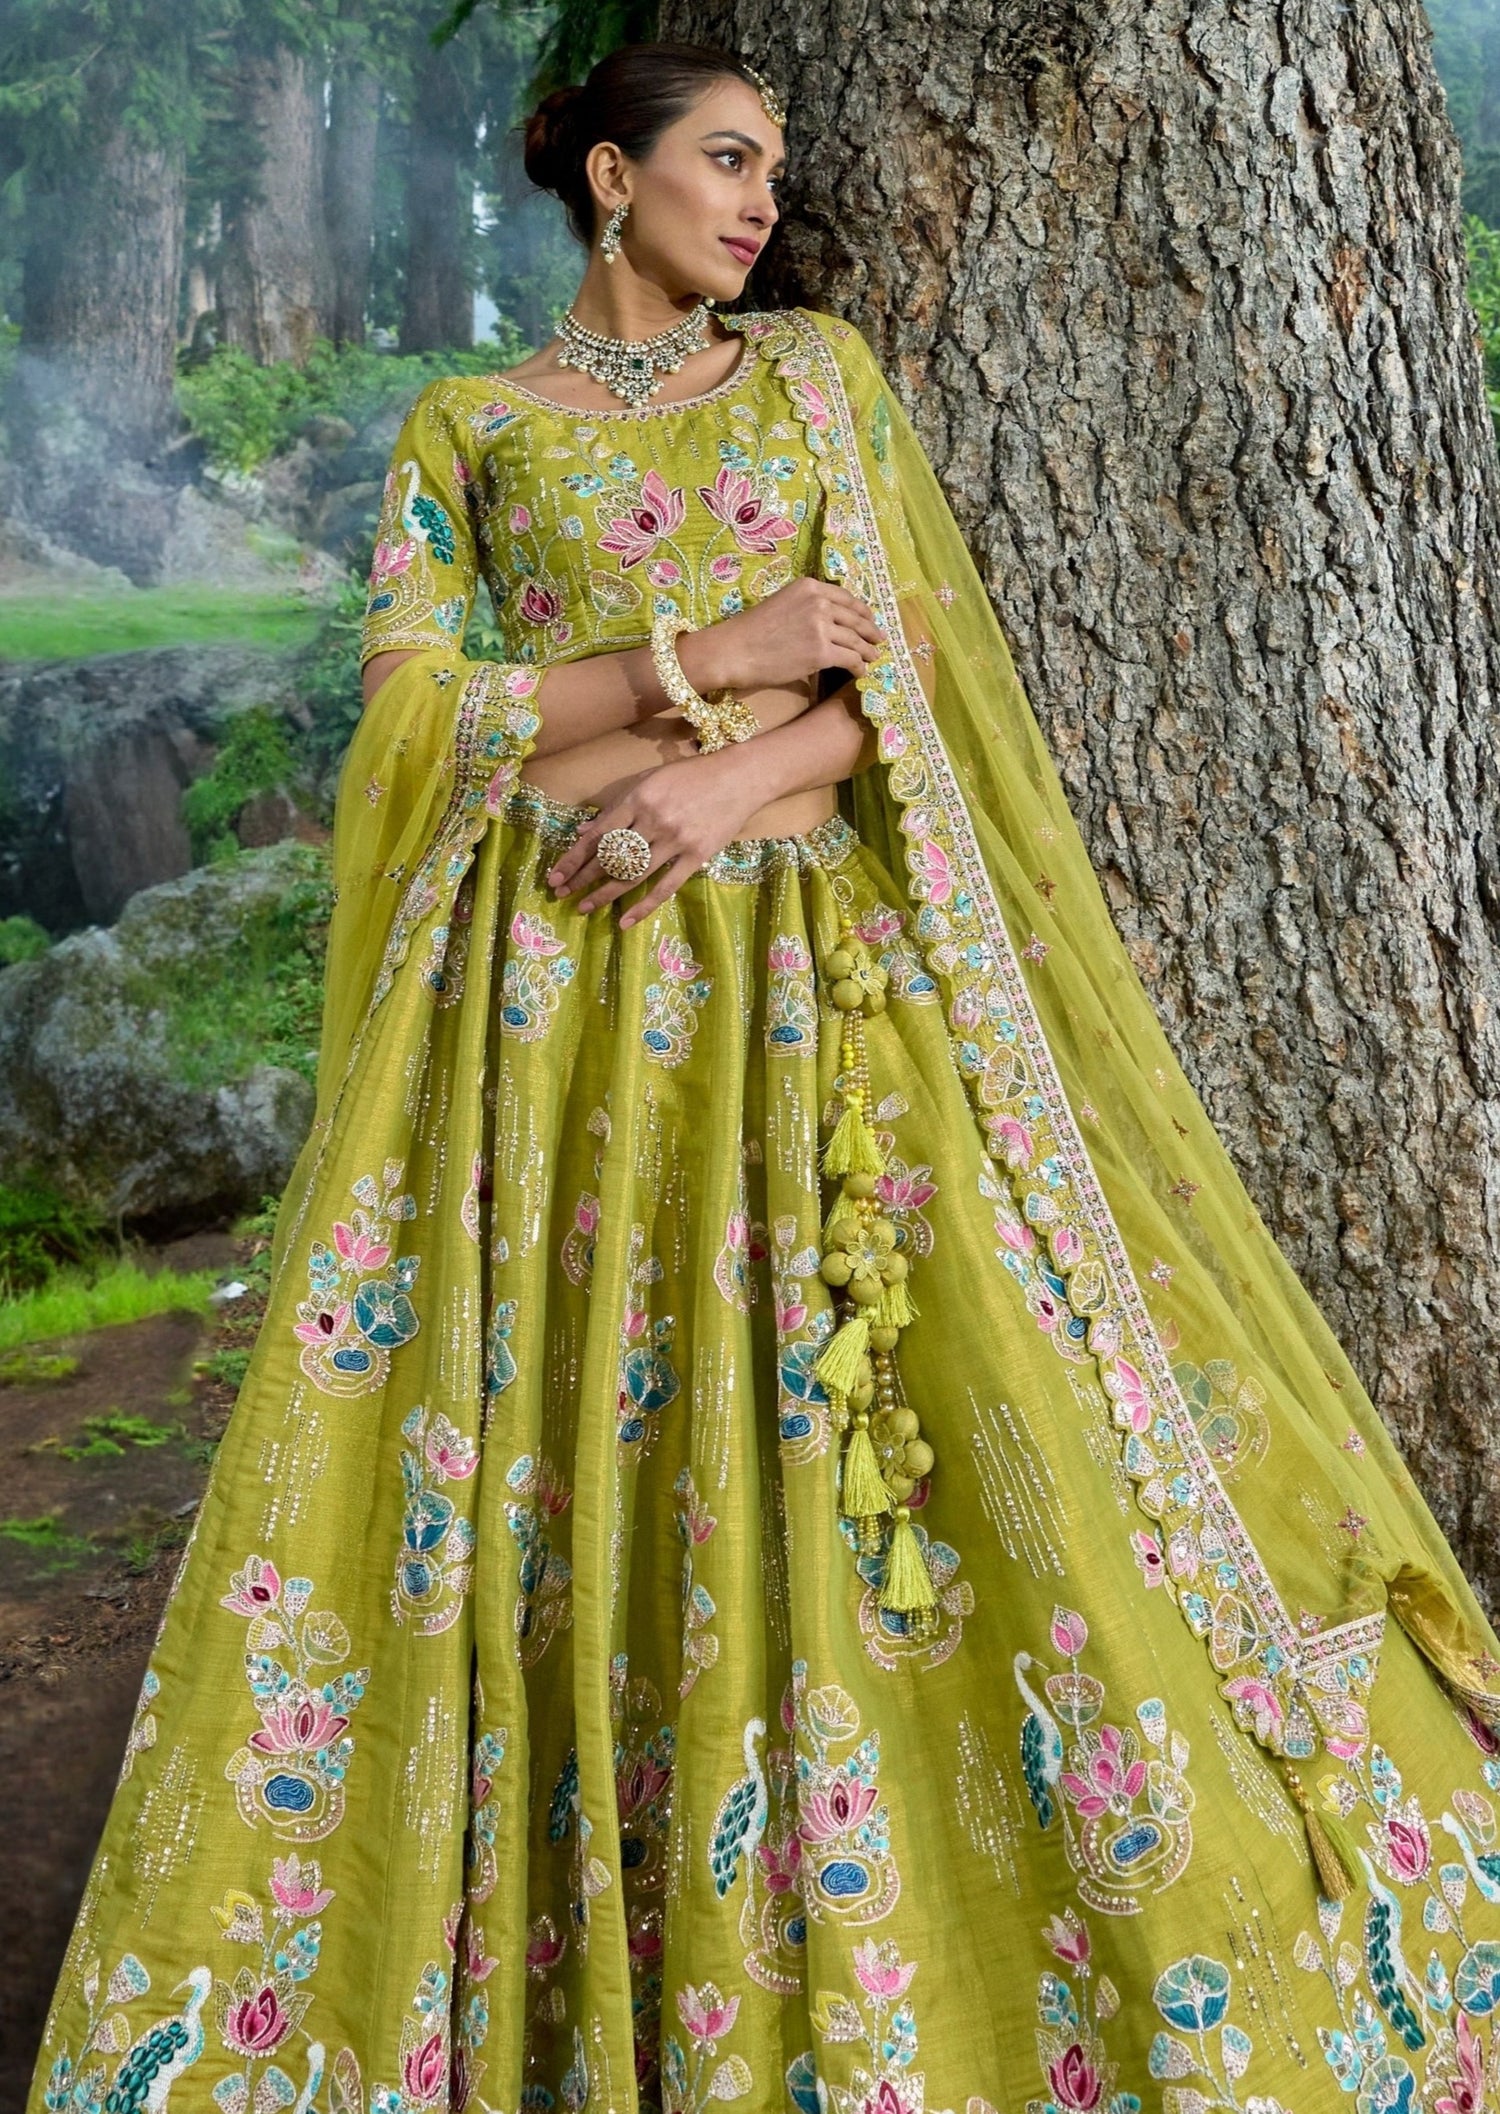 Designer luxury bridal traditional lehenga choli in green online usa uk london uae dubai.